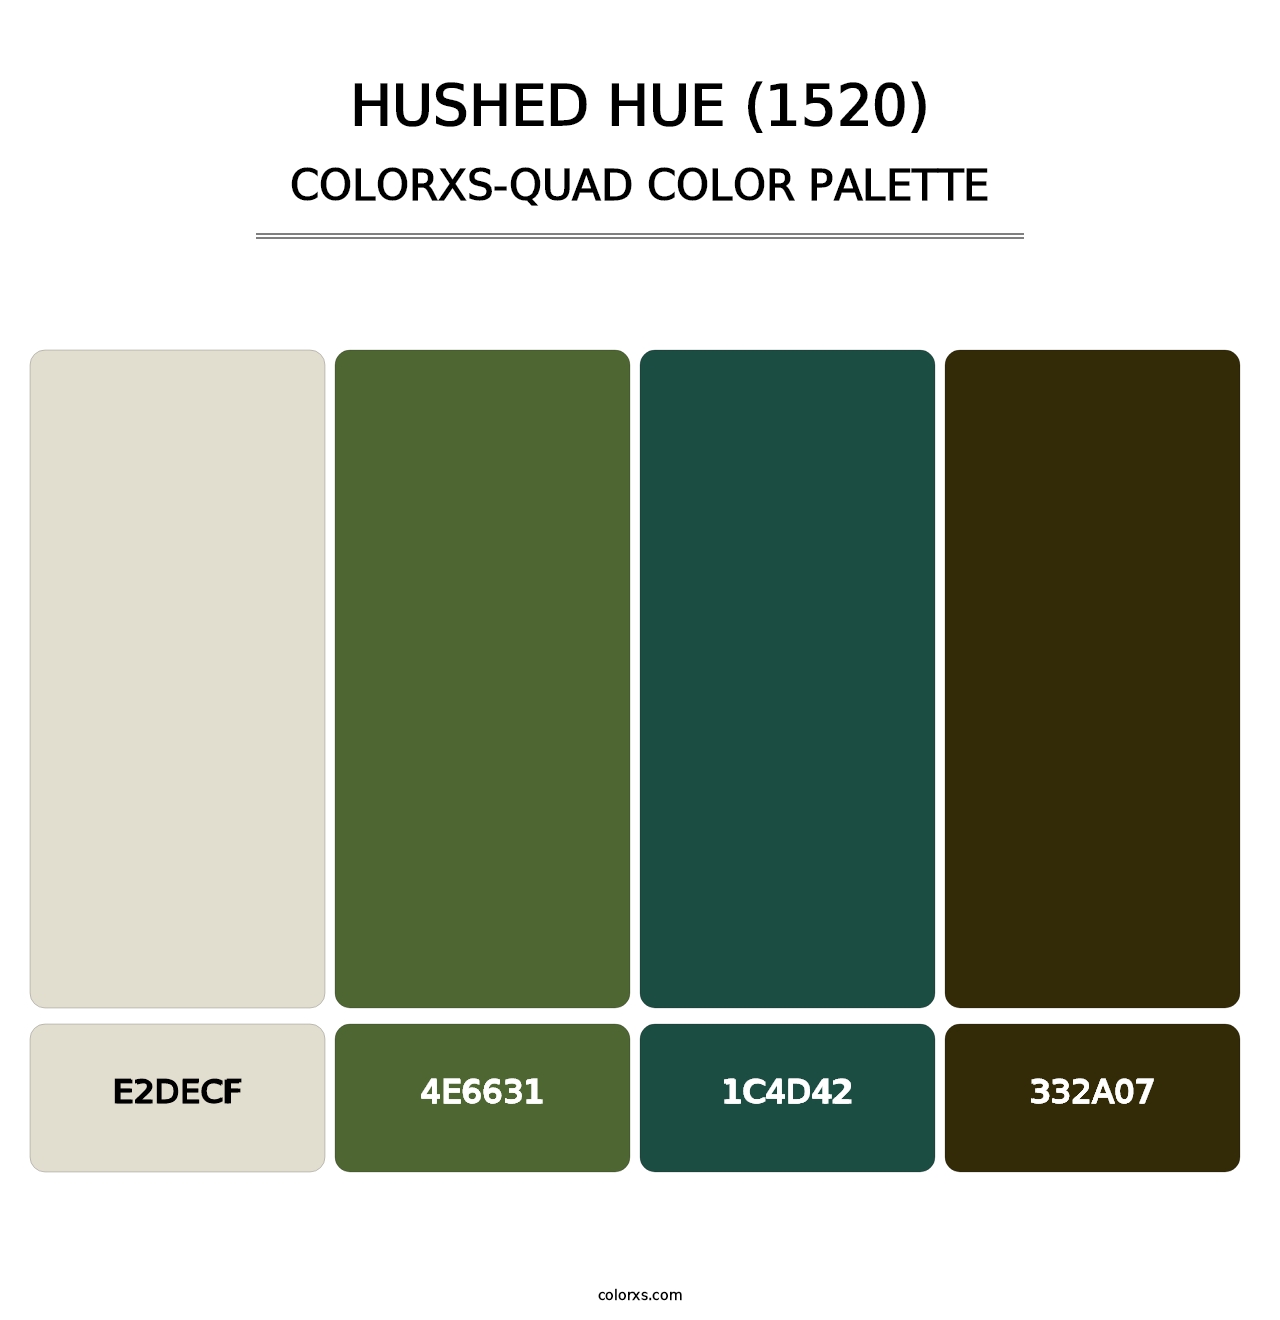 Hushed Hue (1520) - Colorxs Quad Palette